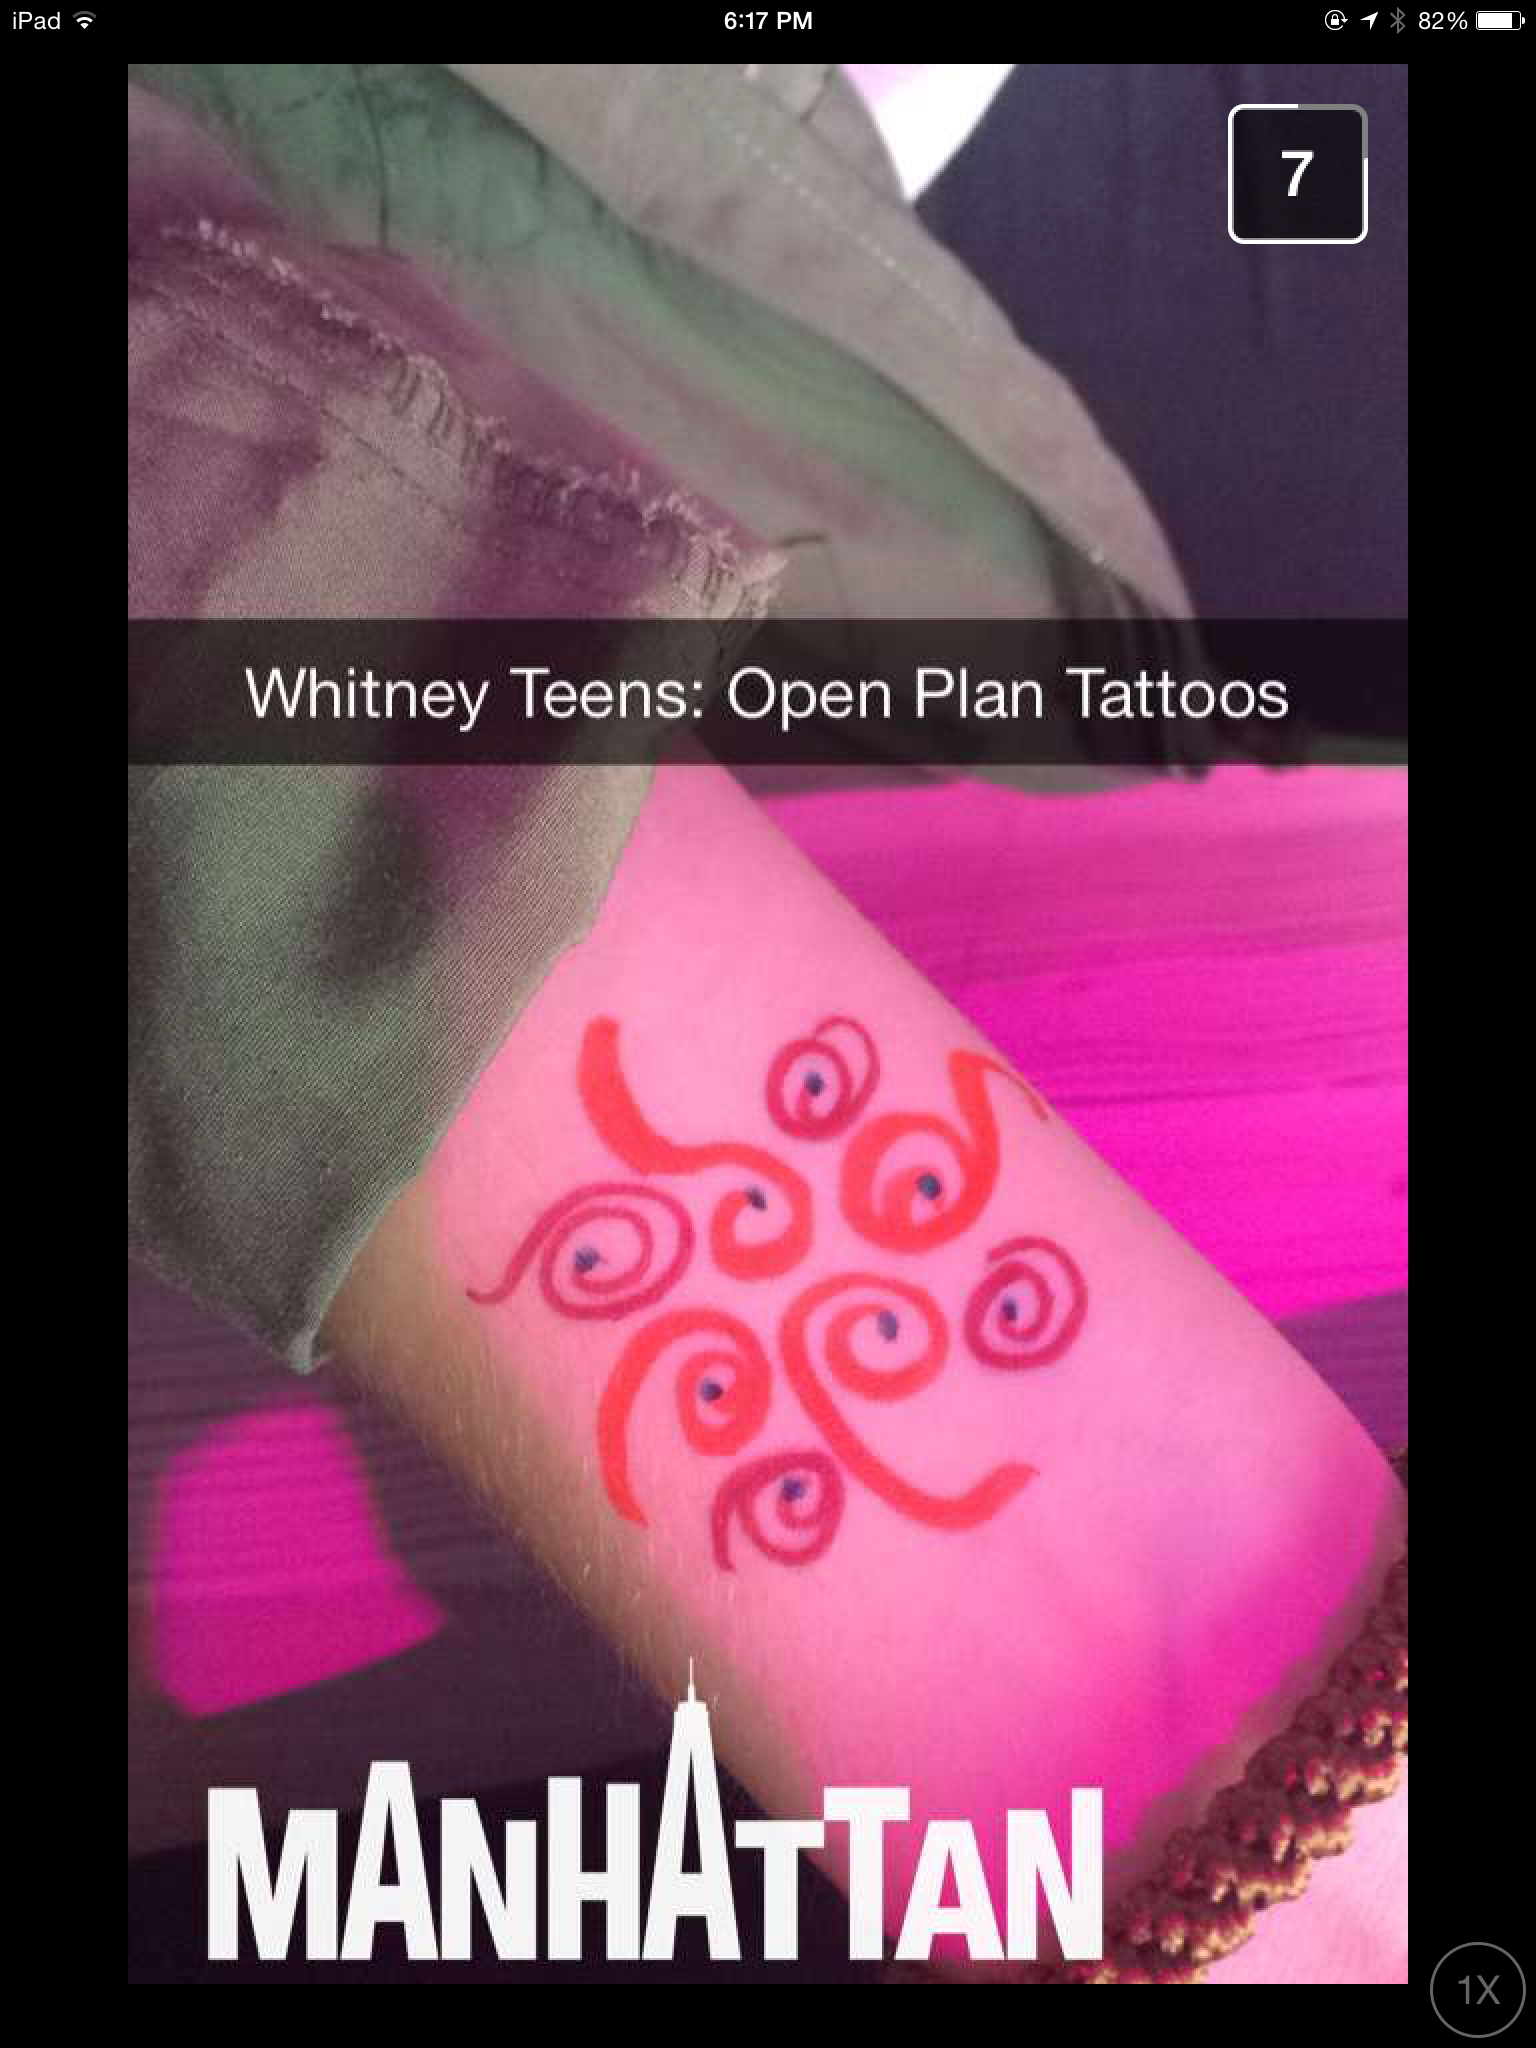 A teen shows off their tattoo